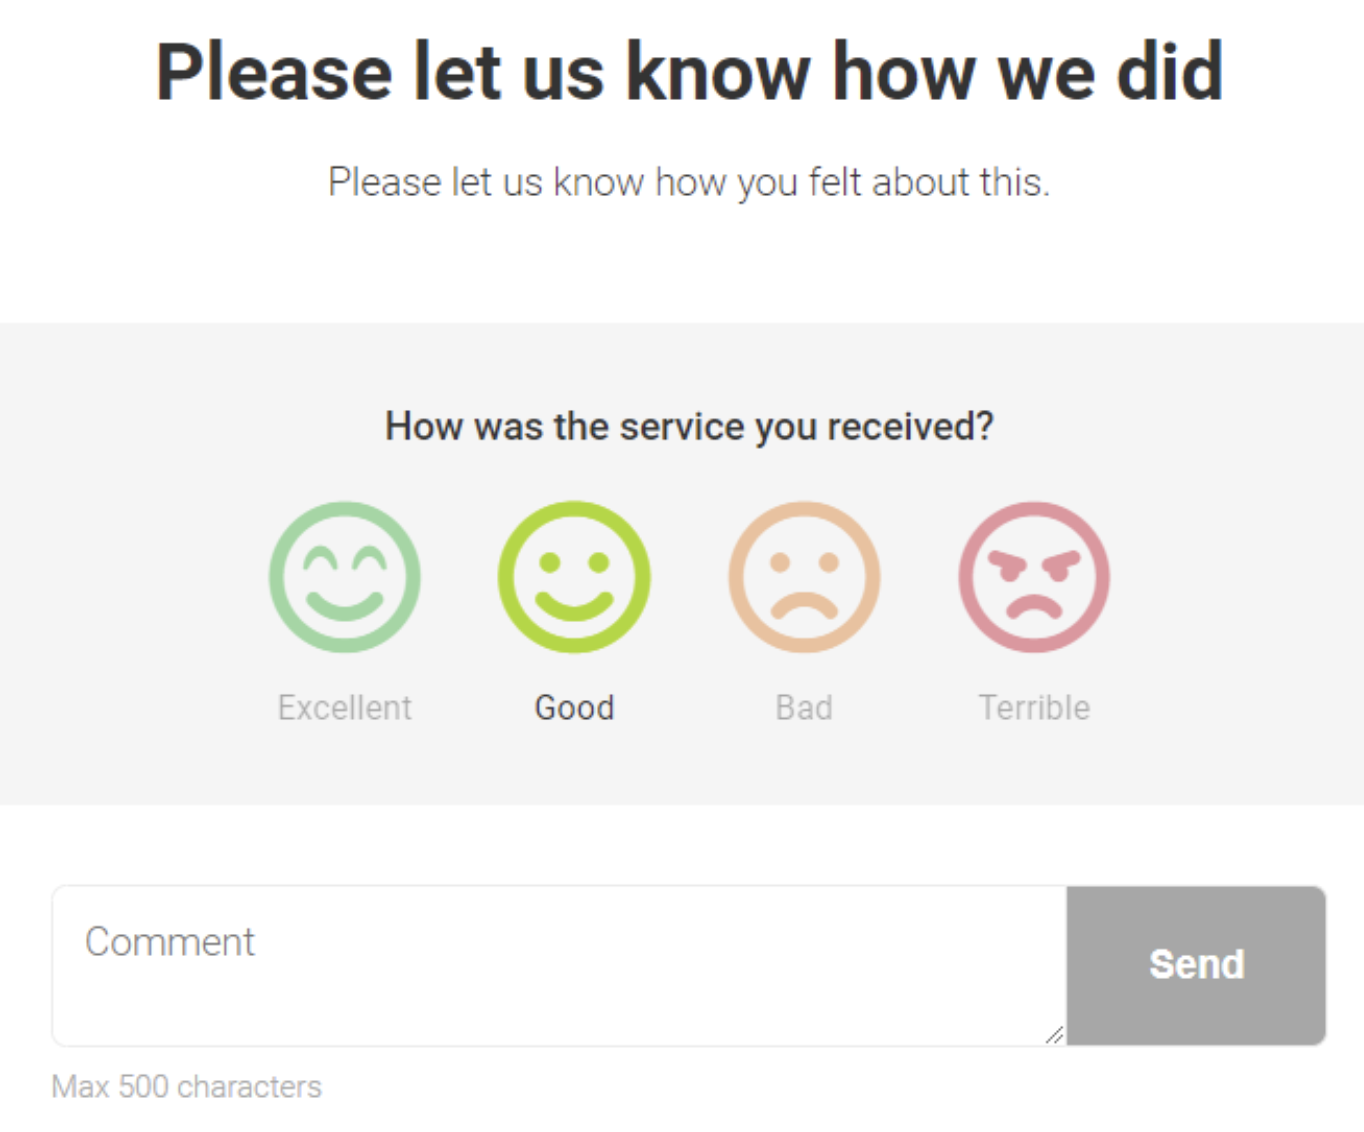 Gathering customer satisfaction feedback